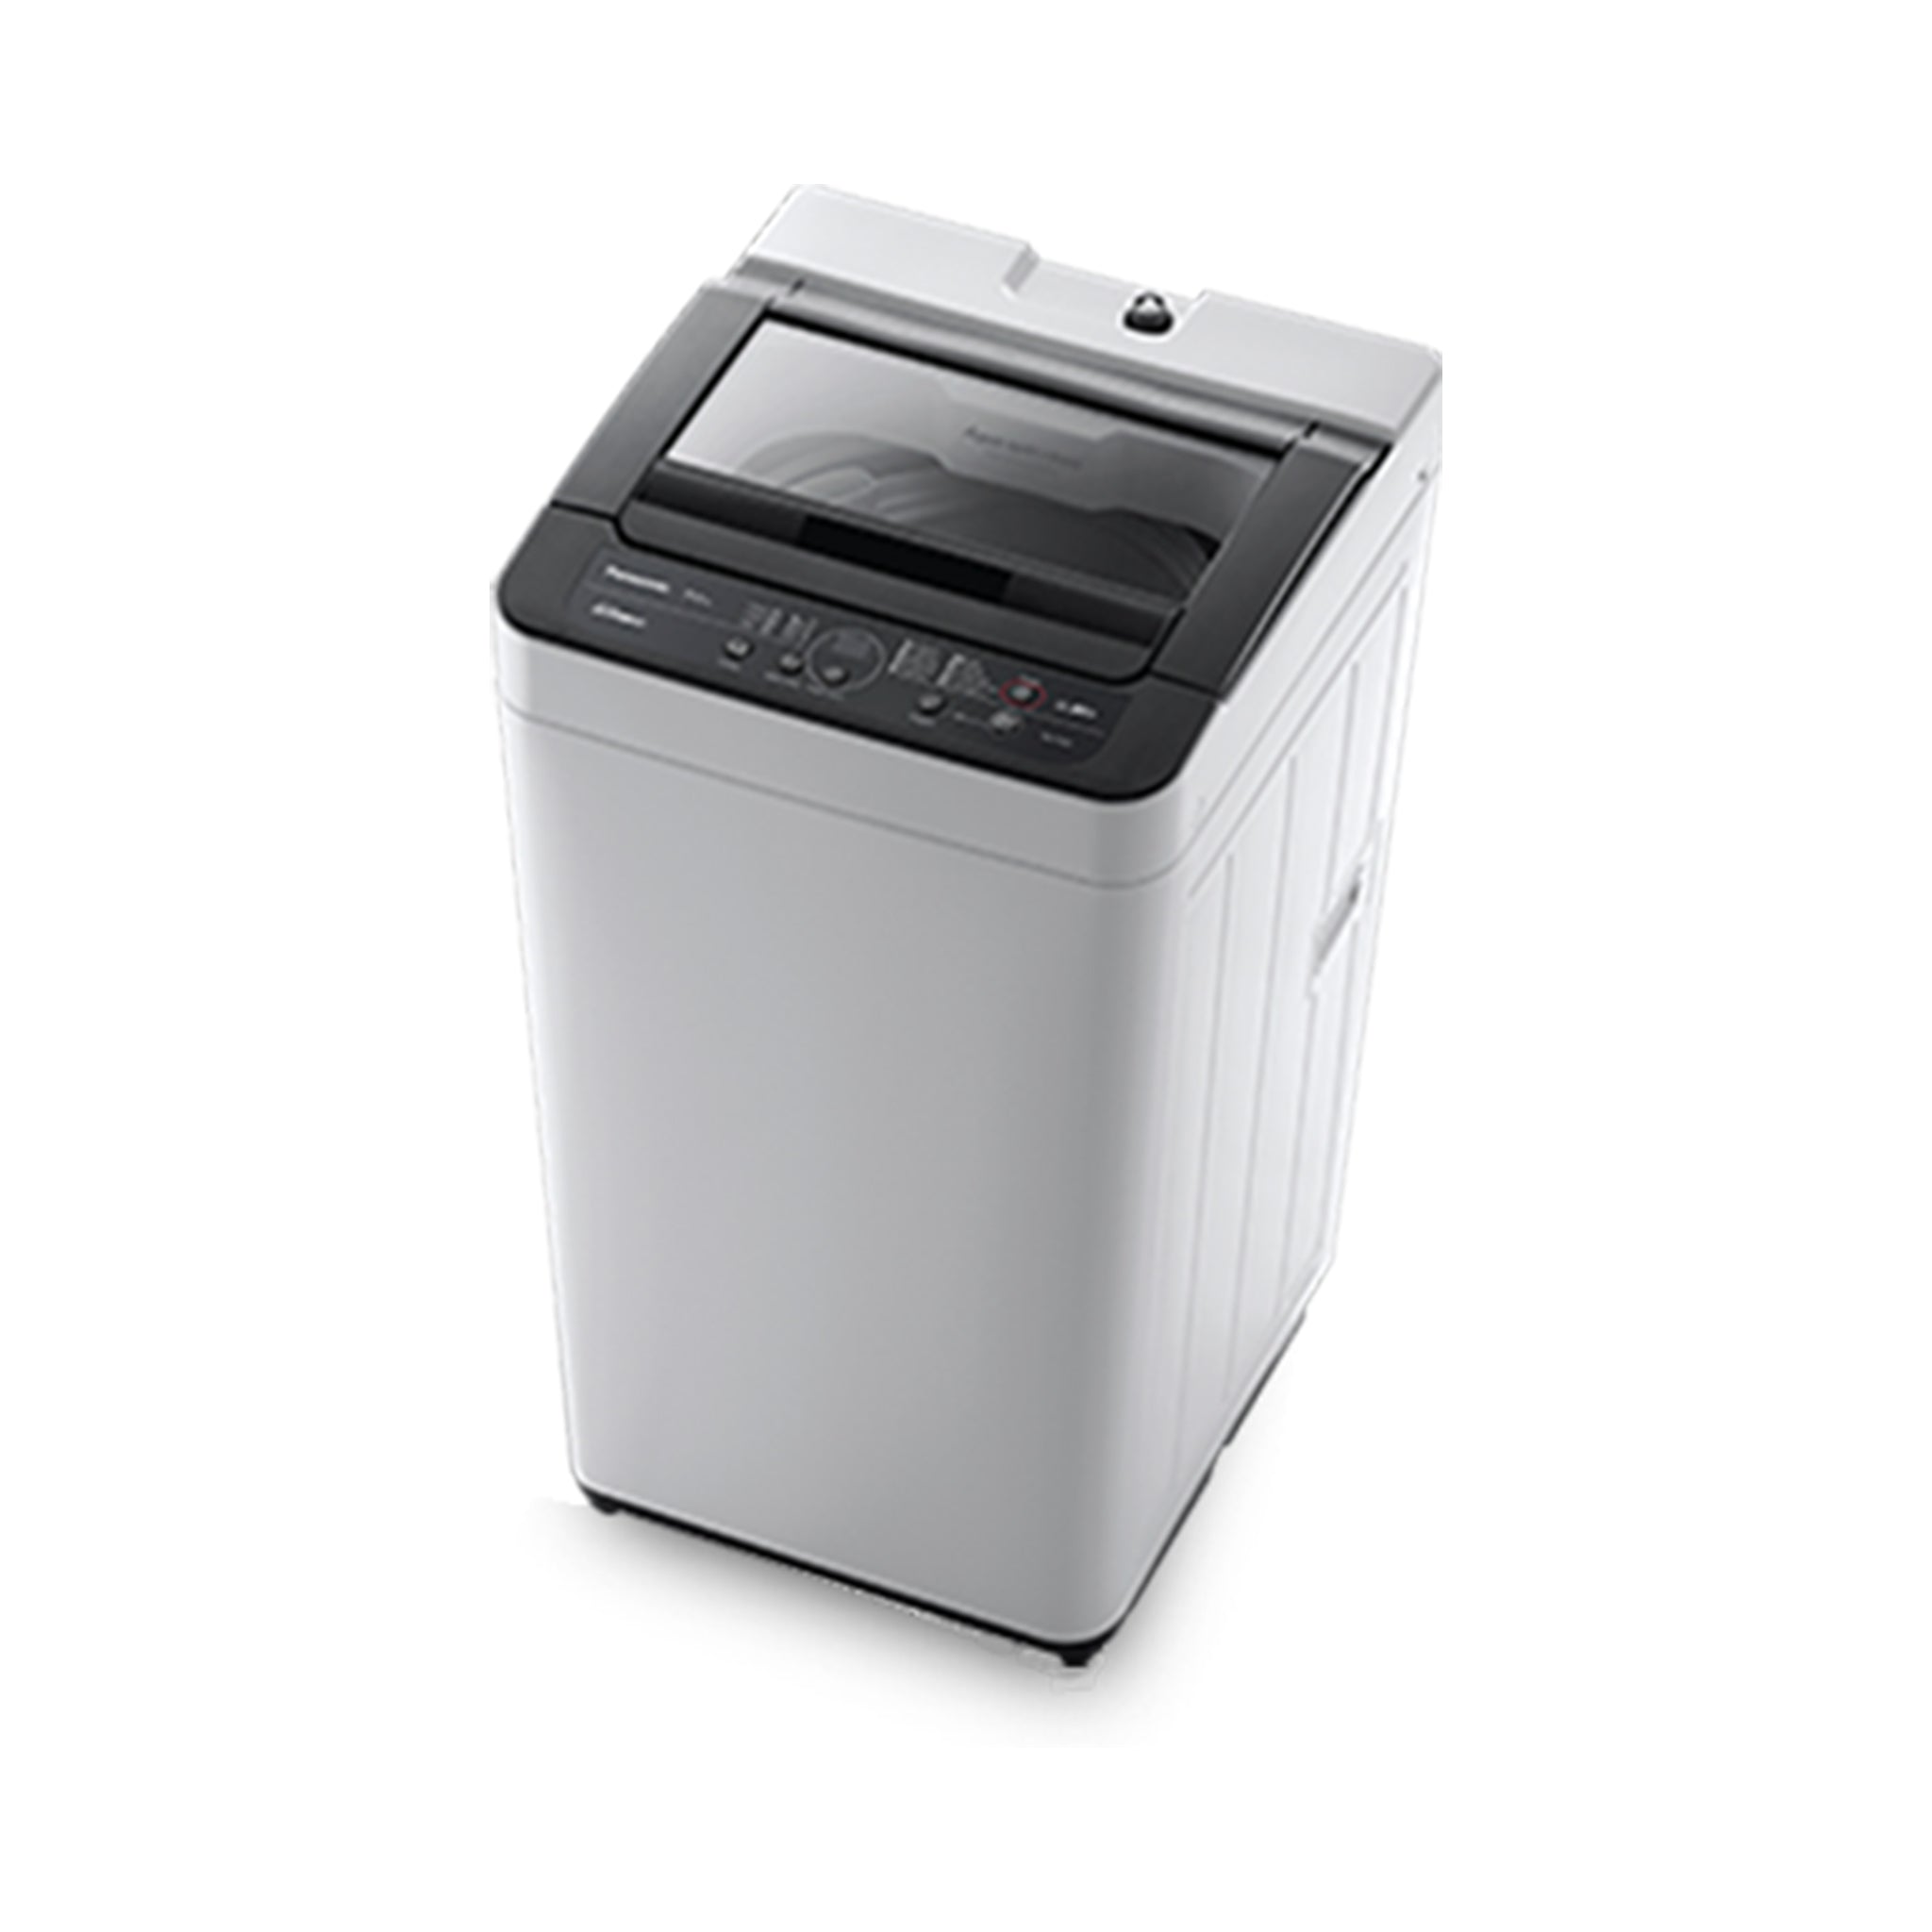 Panasonic NA-F80S7HRM1 Top Load Washing Machine Panasonic